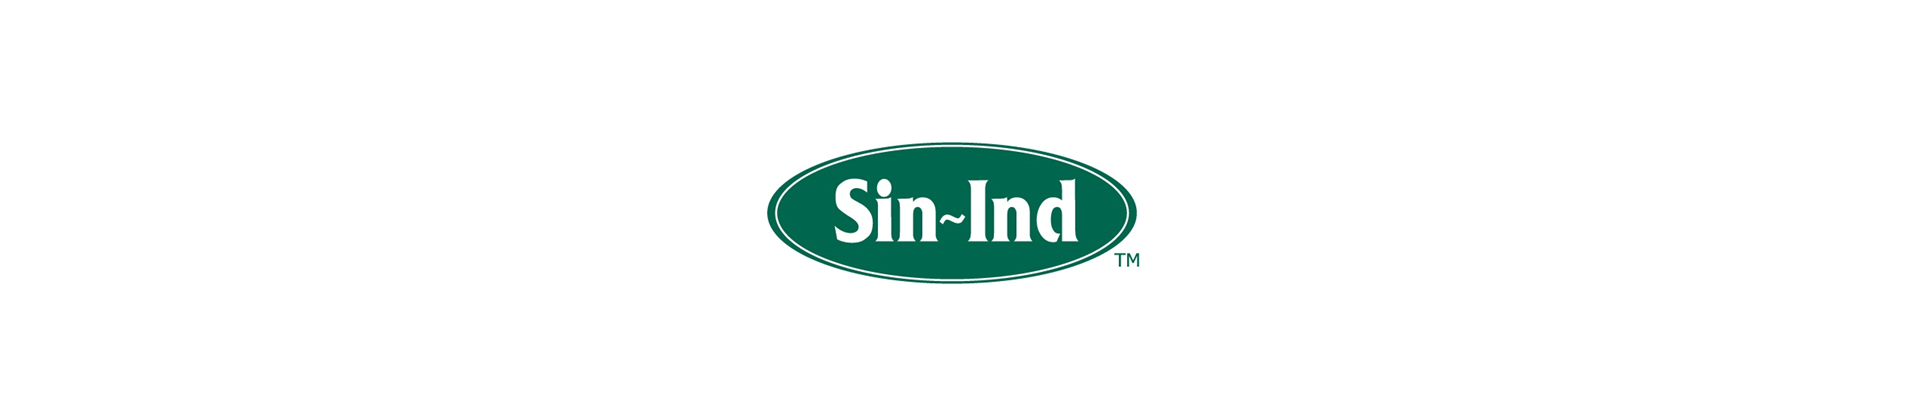 Categories - Sin-Ind brands